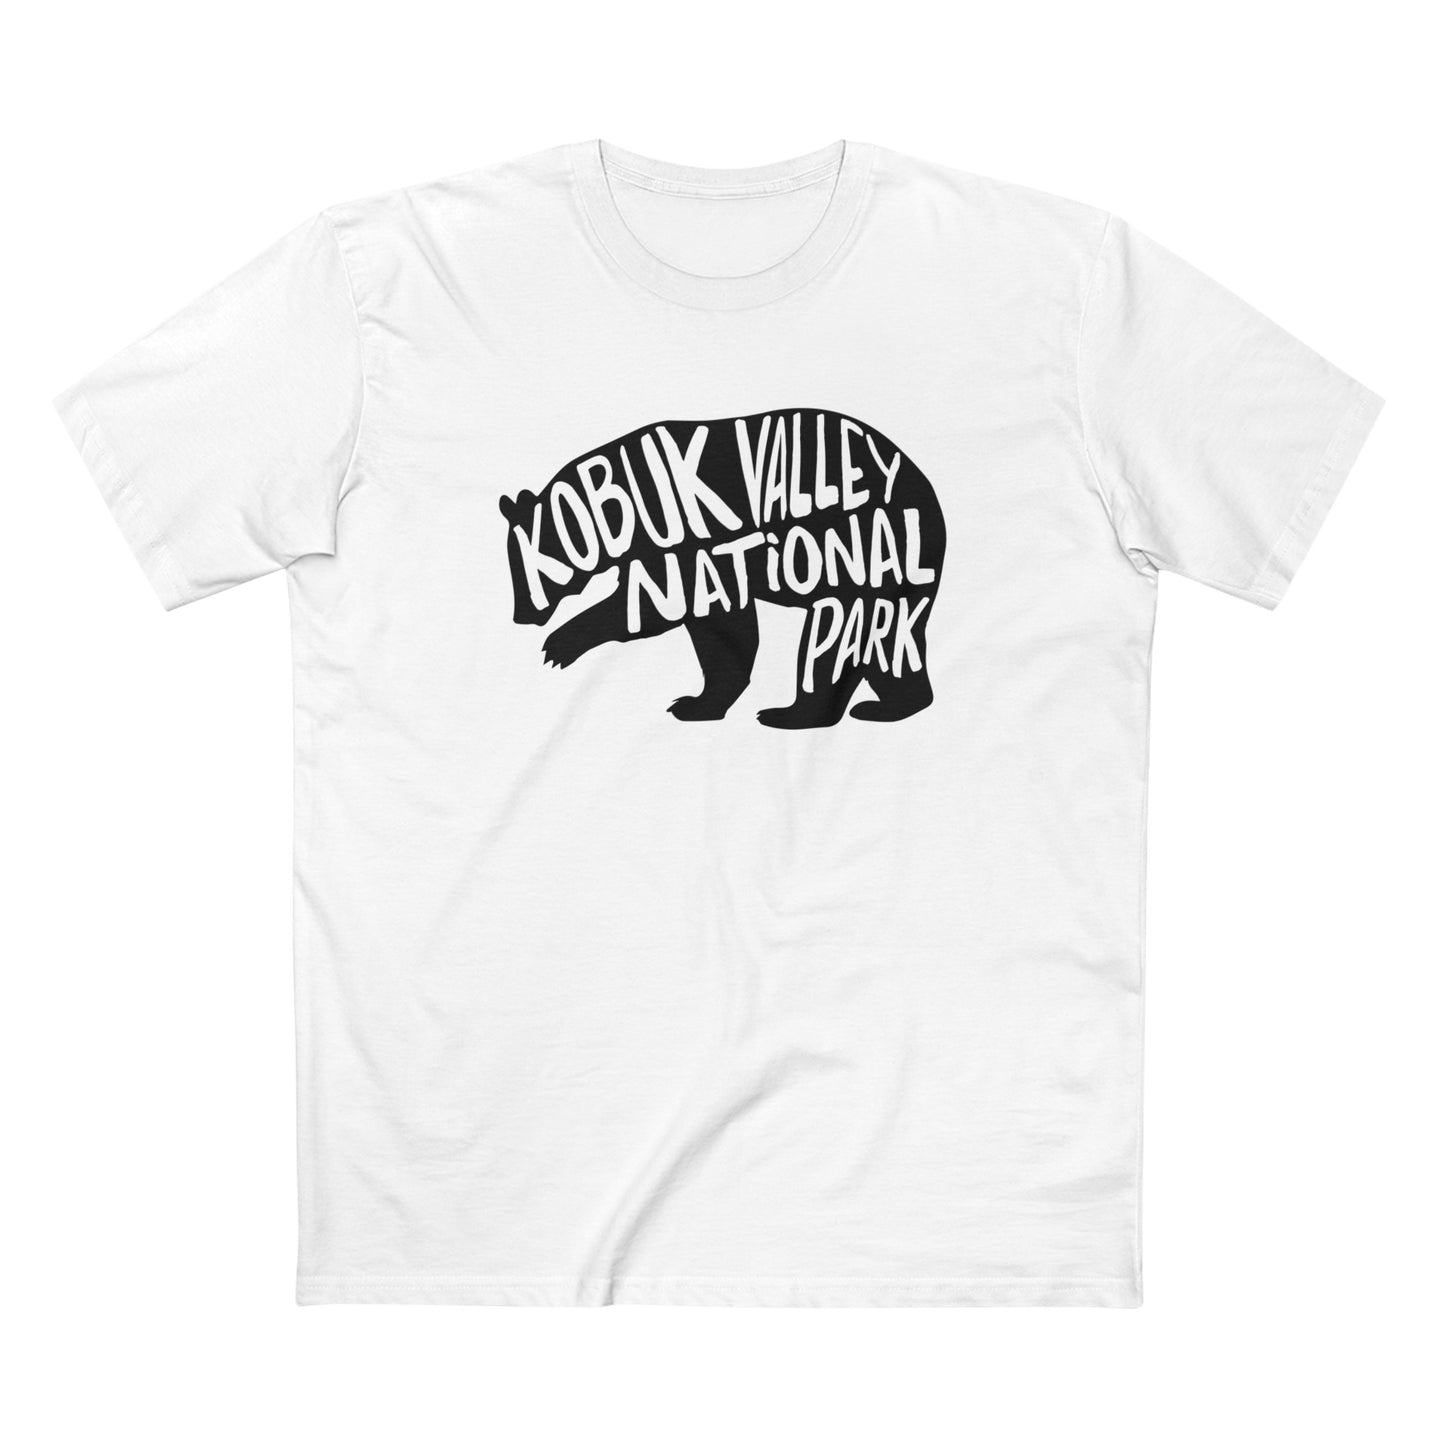 Kobuk Valley National Park T-Shirt - Grizzly Bear